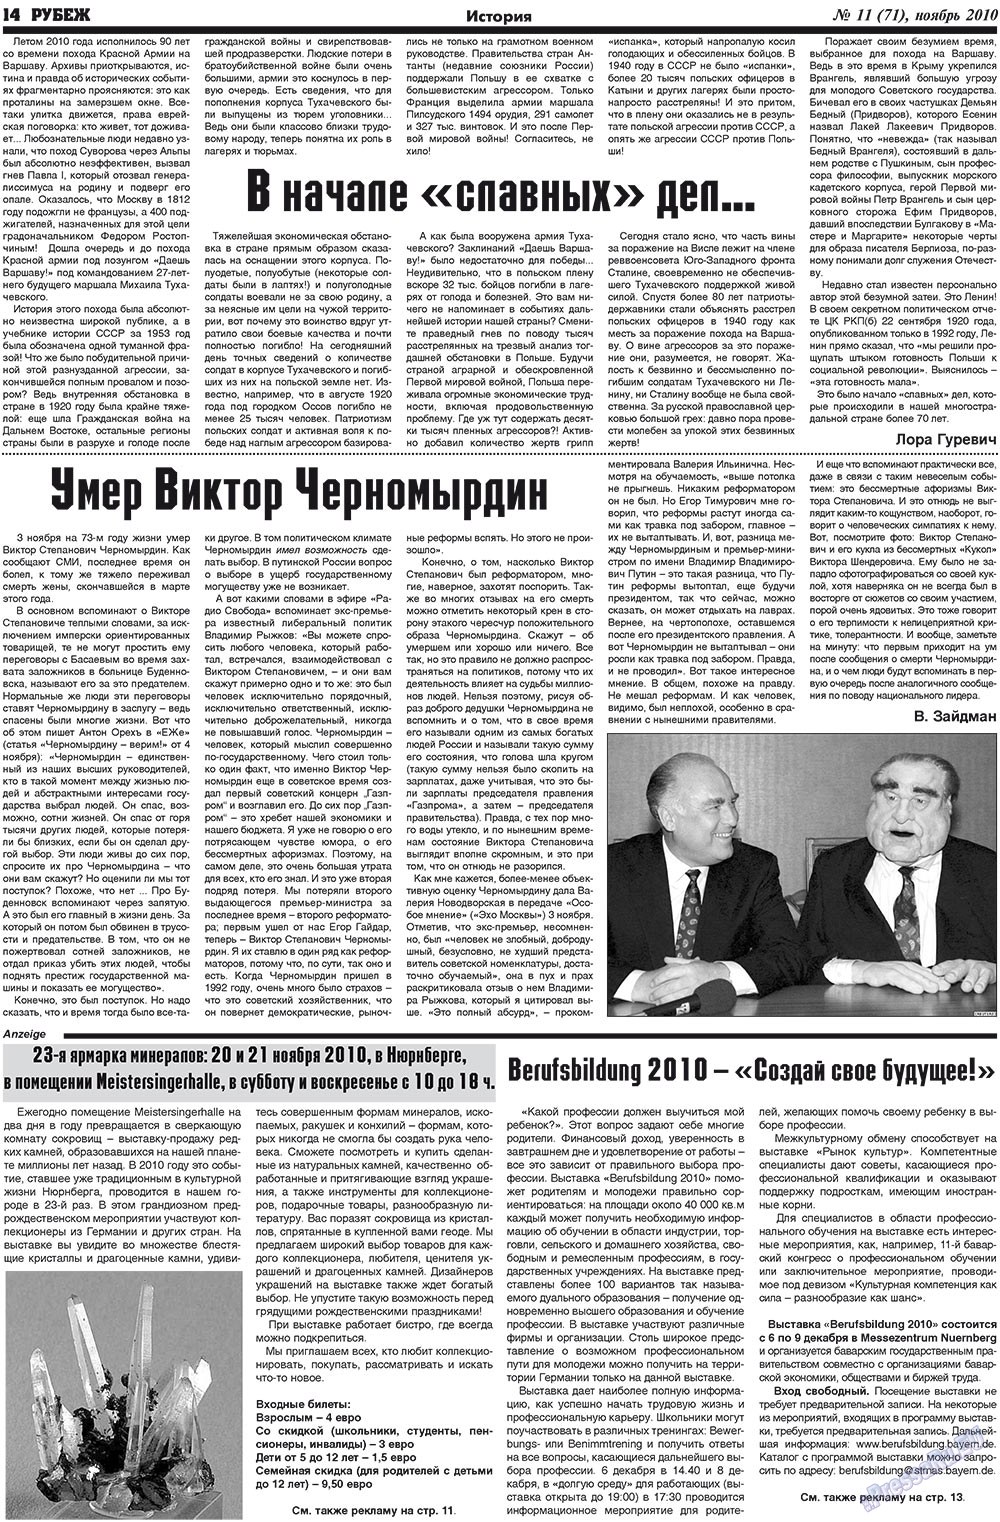 Рубеж, газета. 2010 №11 стр.14